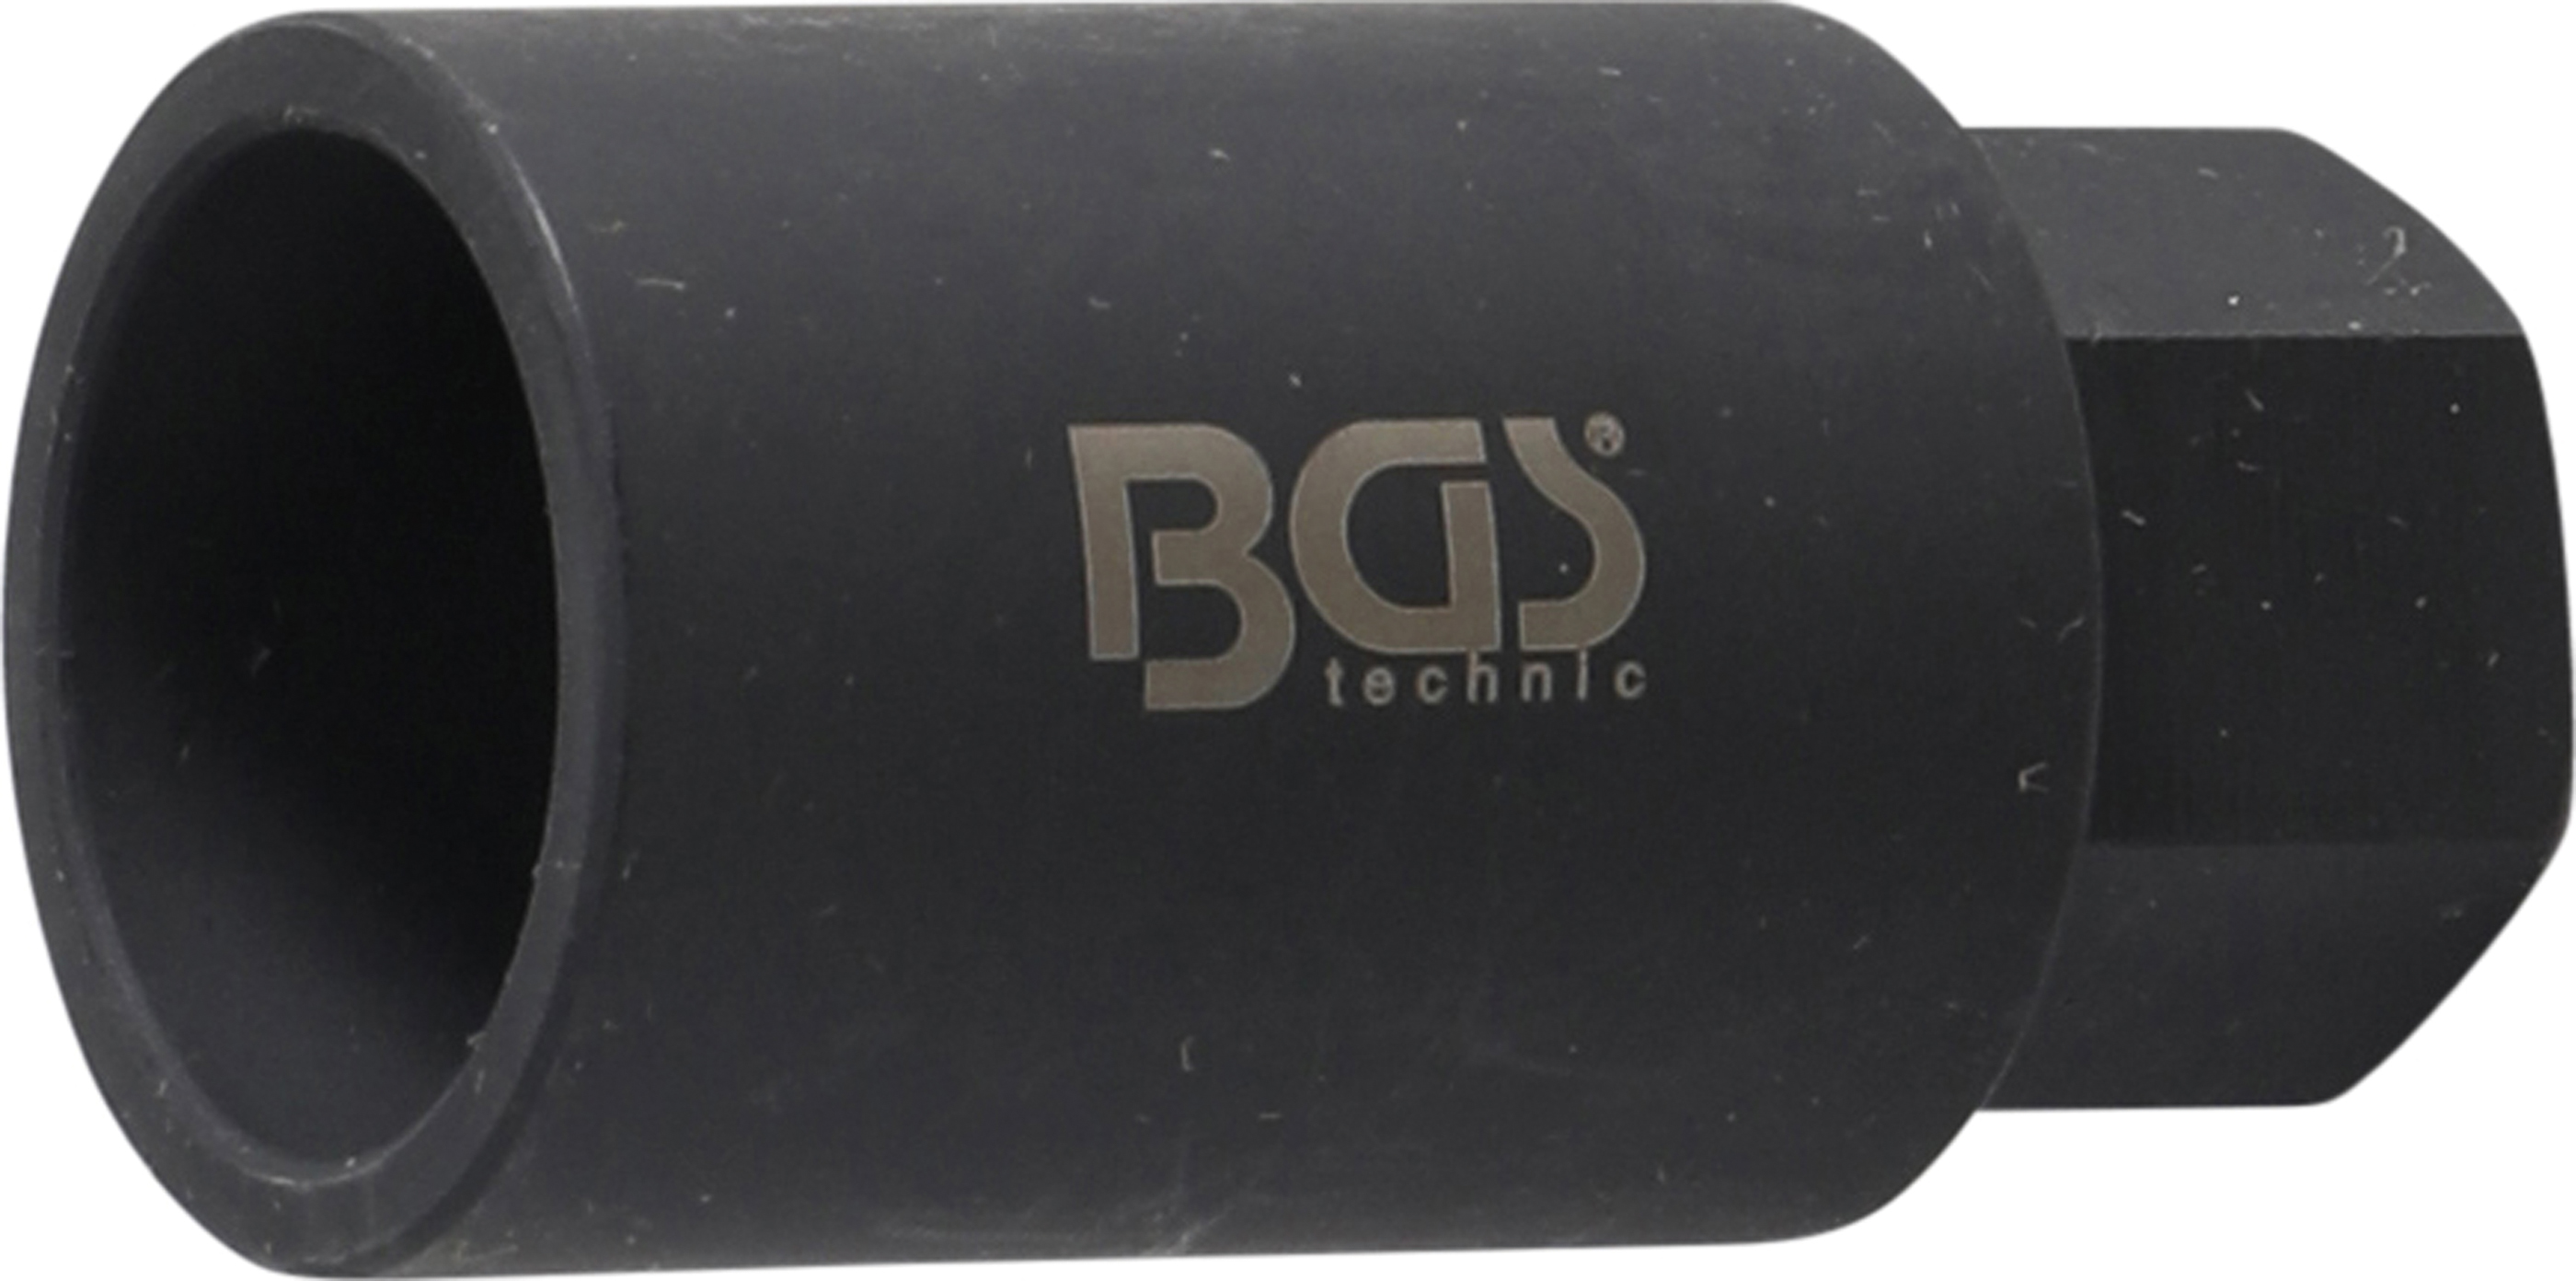 BGS 8656-8 Tubulara conica speciala pentru prezoane de roti deteriorate si antifurt de roata, Ø 23,6 x 21,7 mm